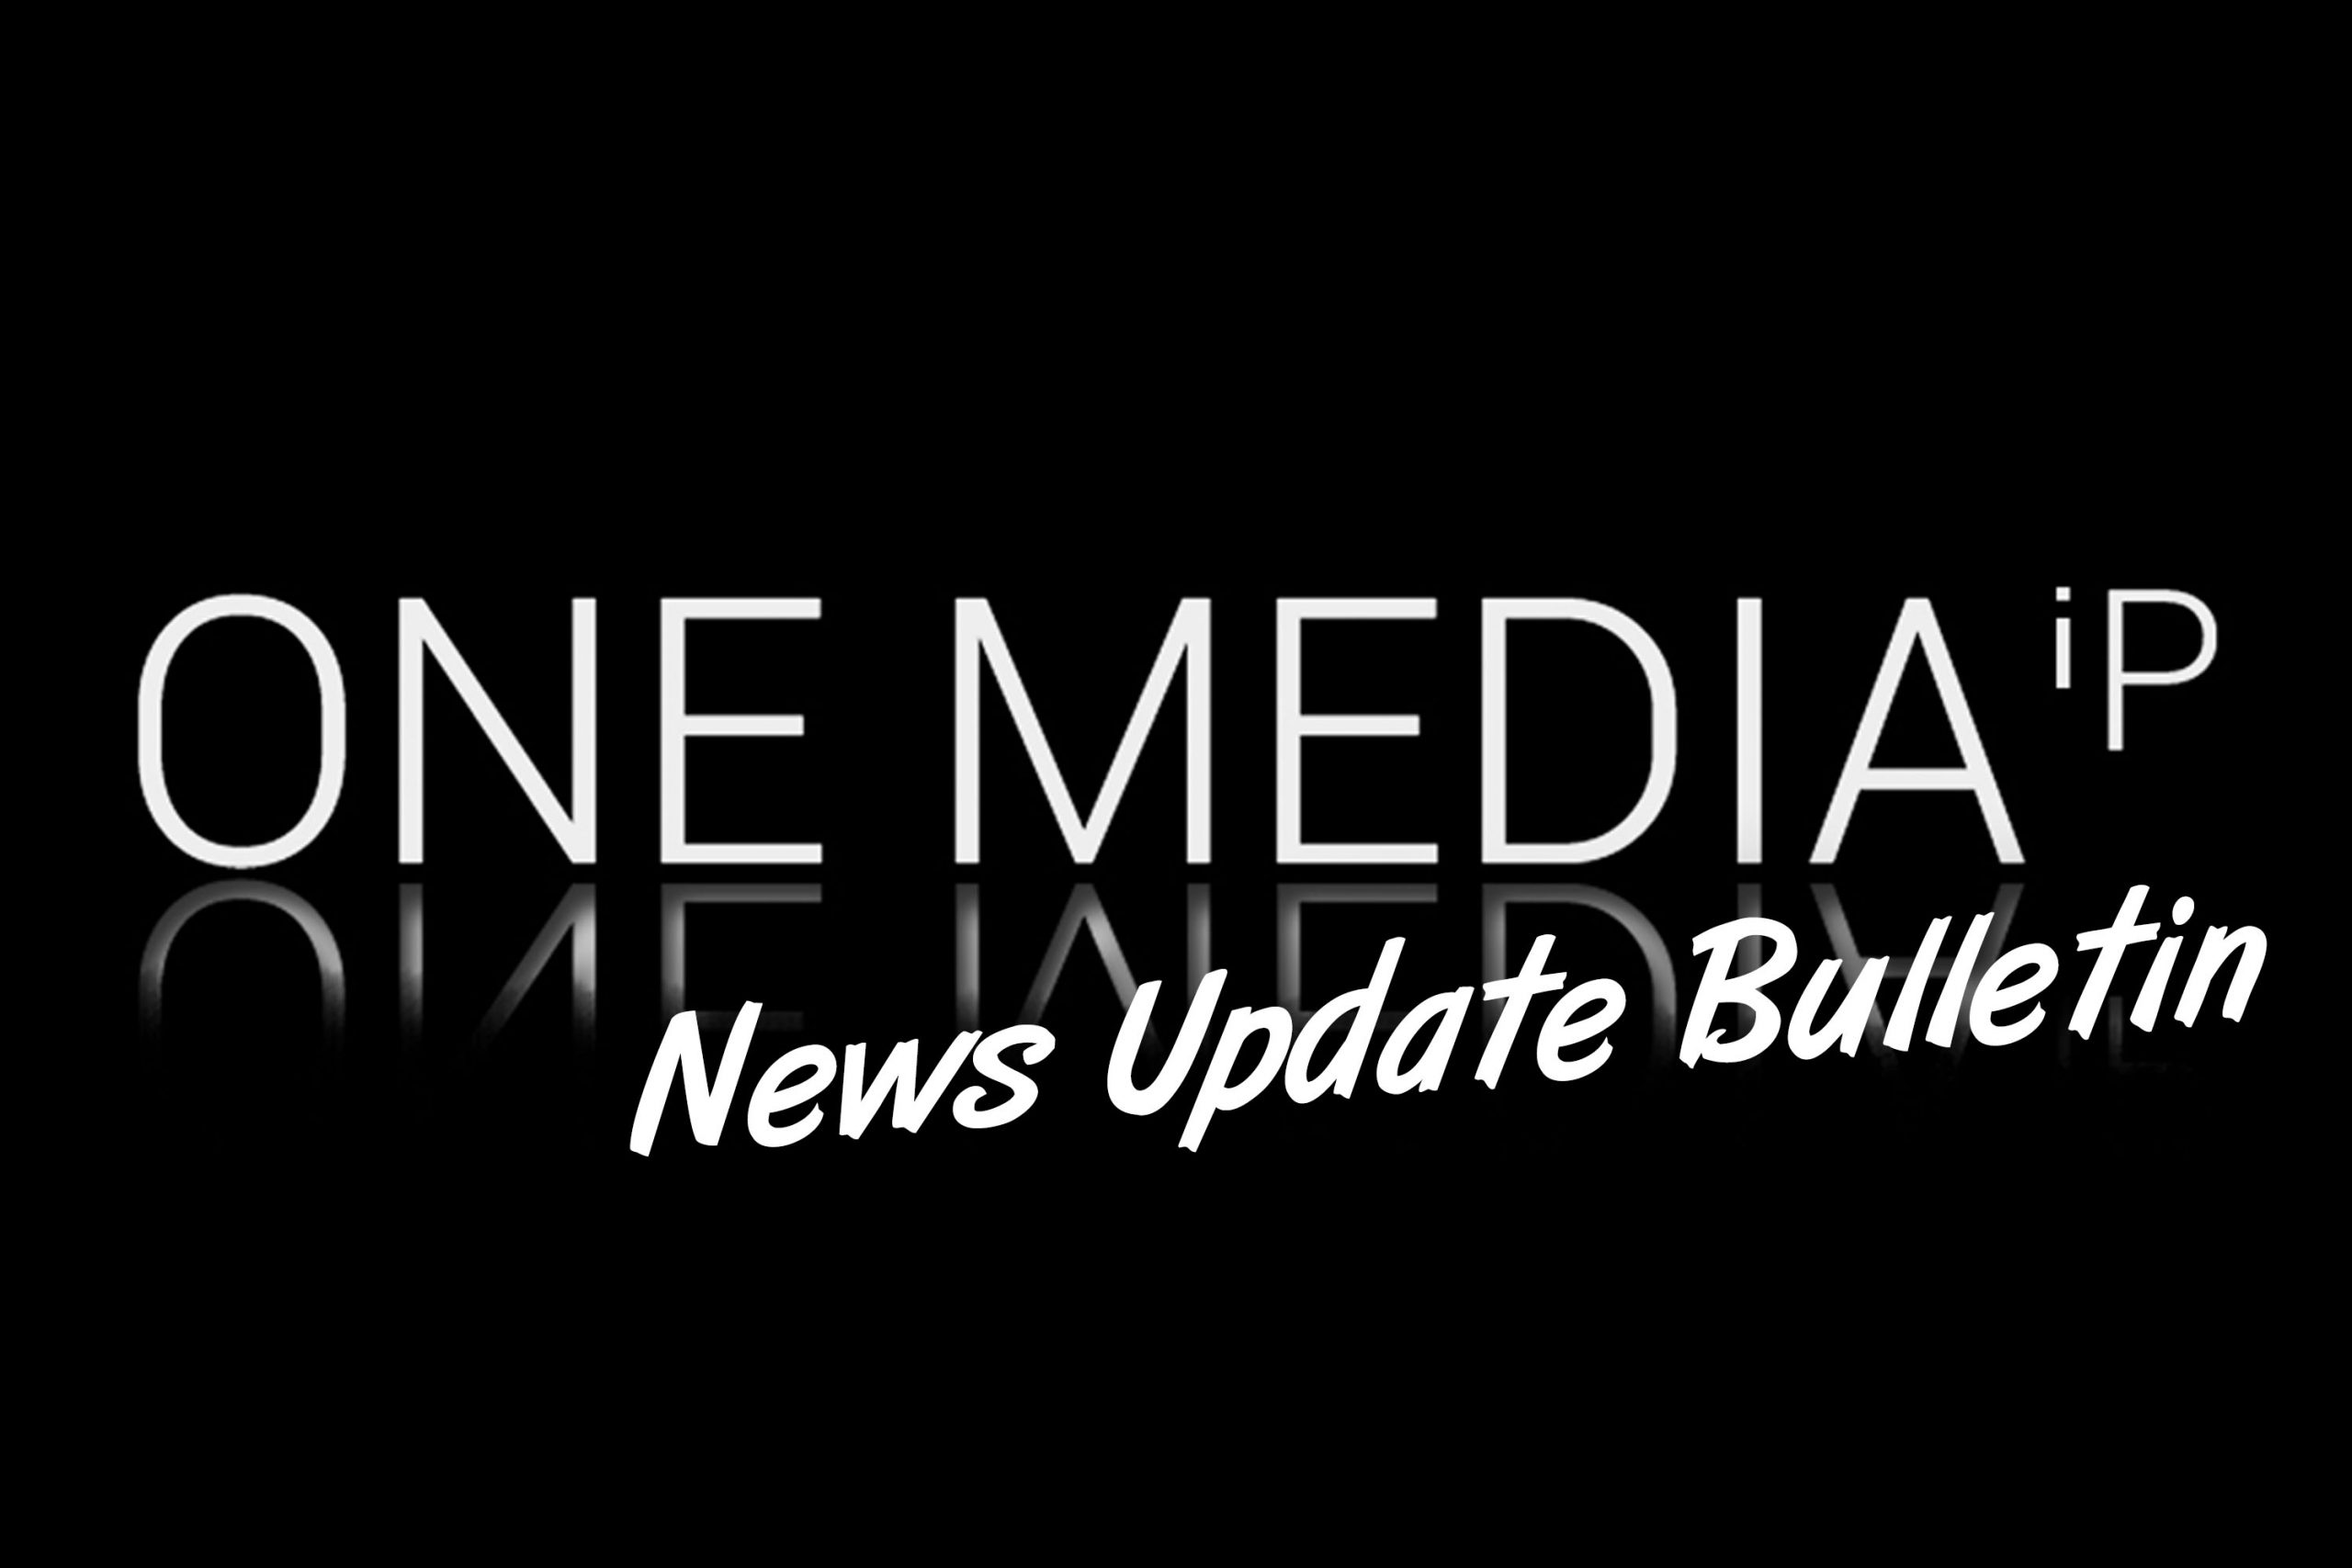 February 2022: News Update Bulletin